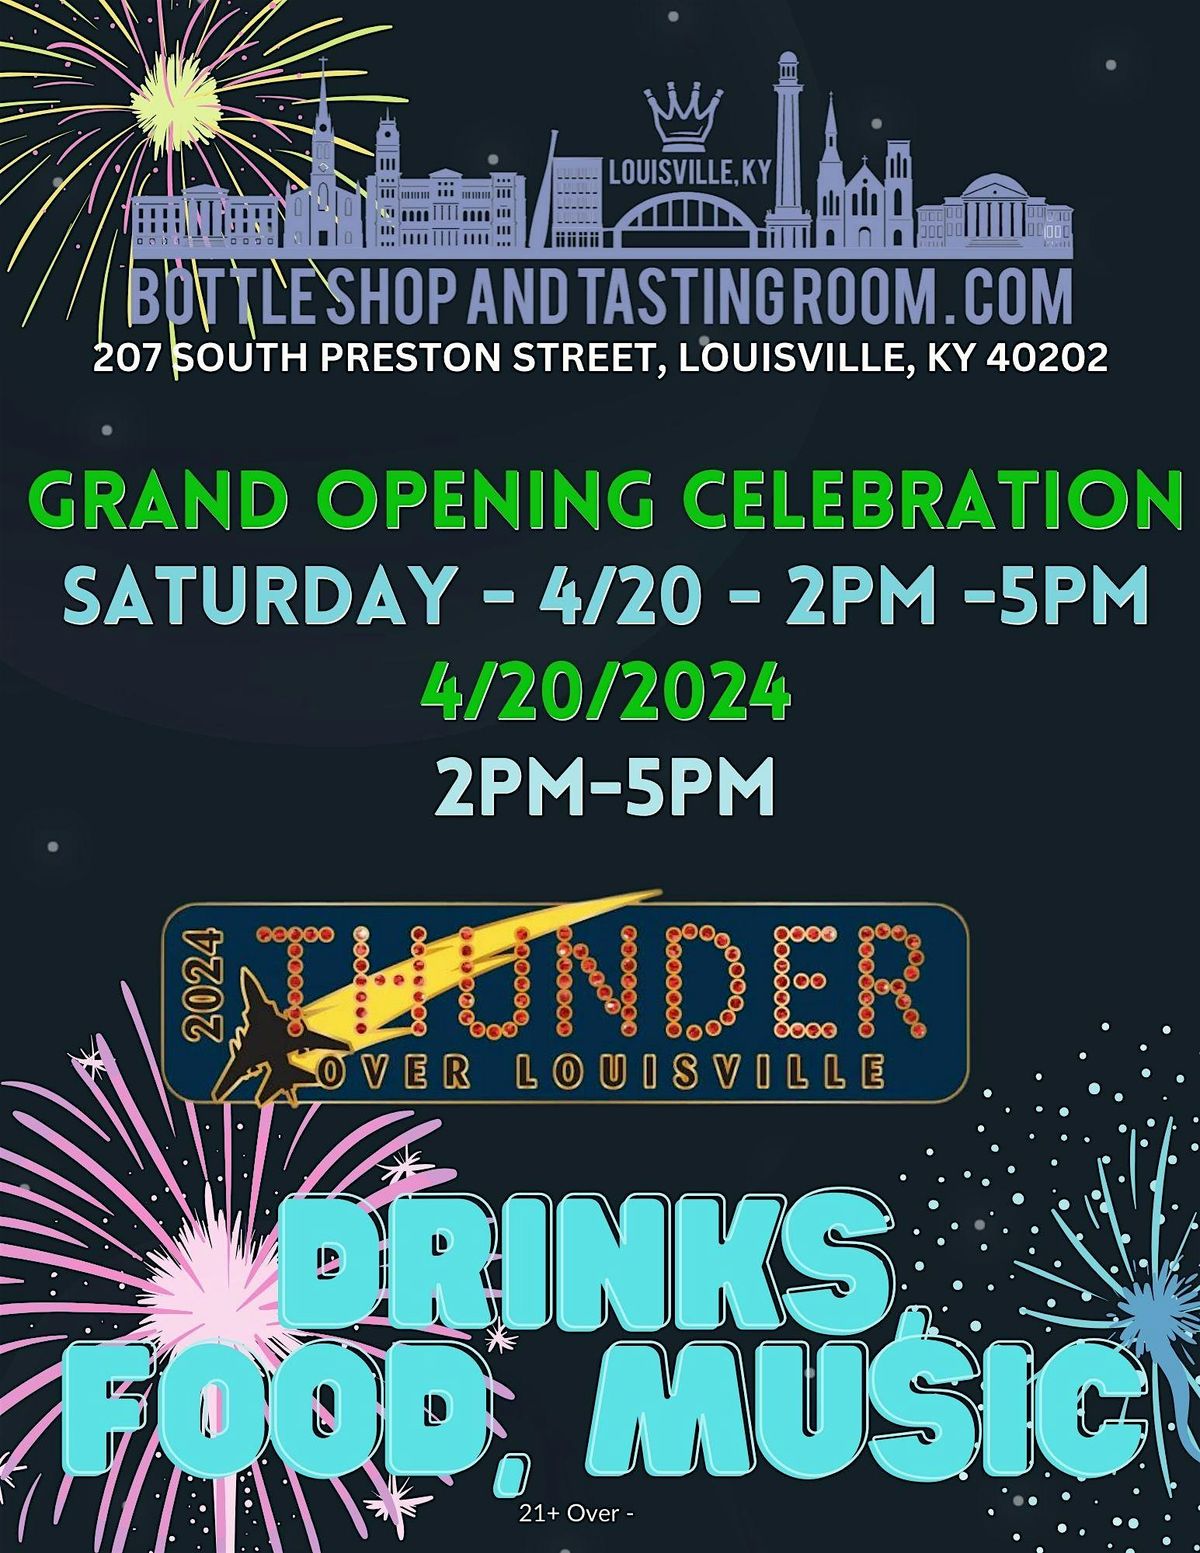 Thunder Over Bottle Shop & Tasting Room: A Grand Opening Celebration